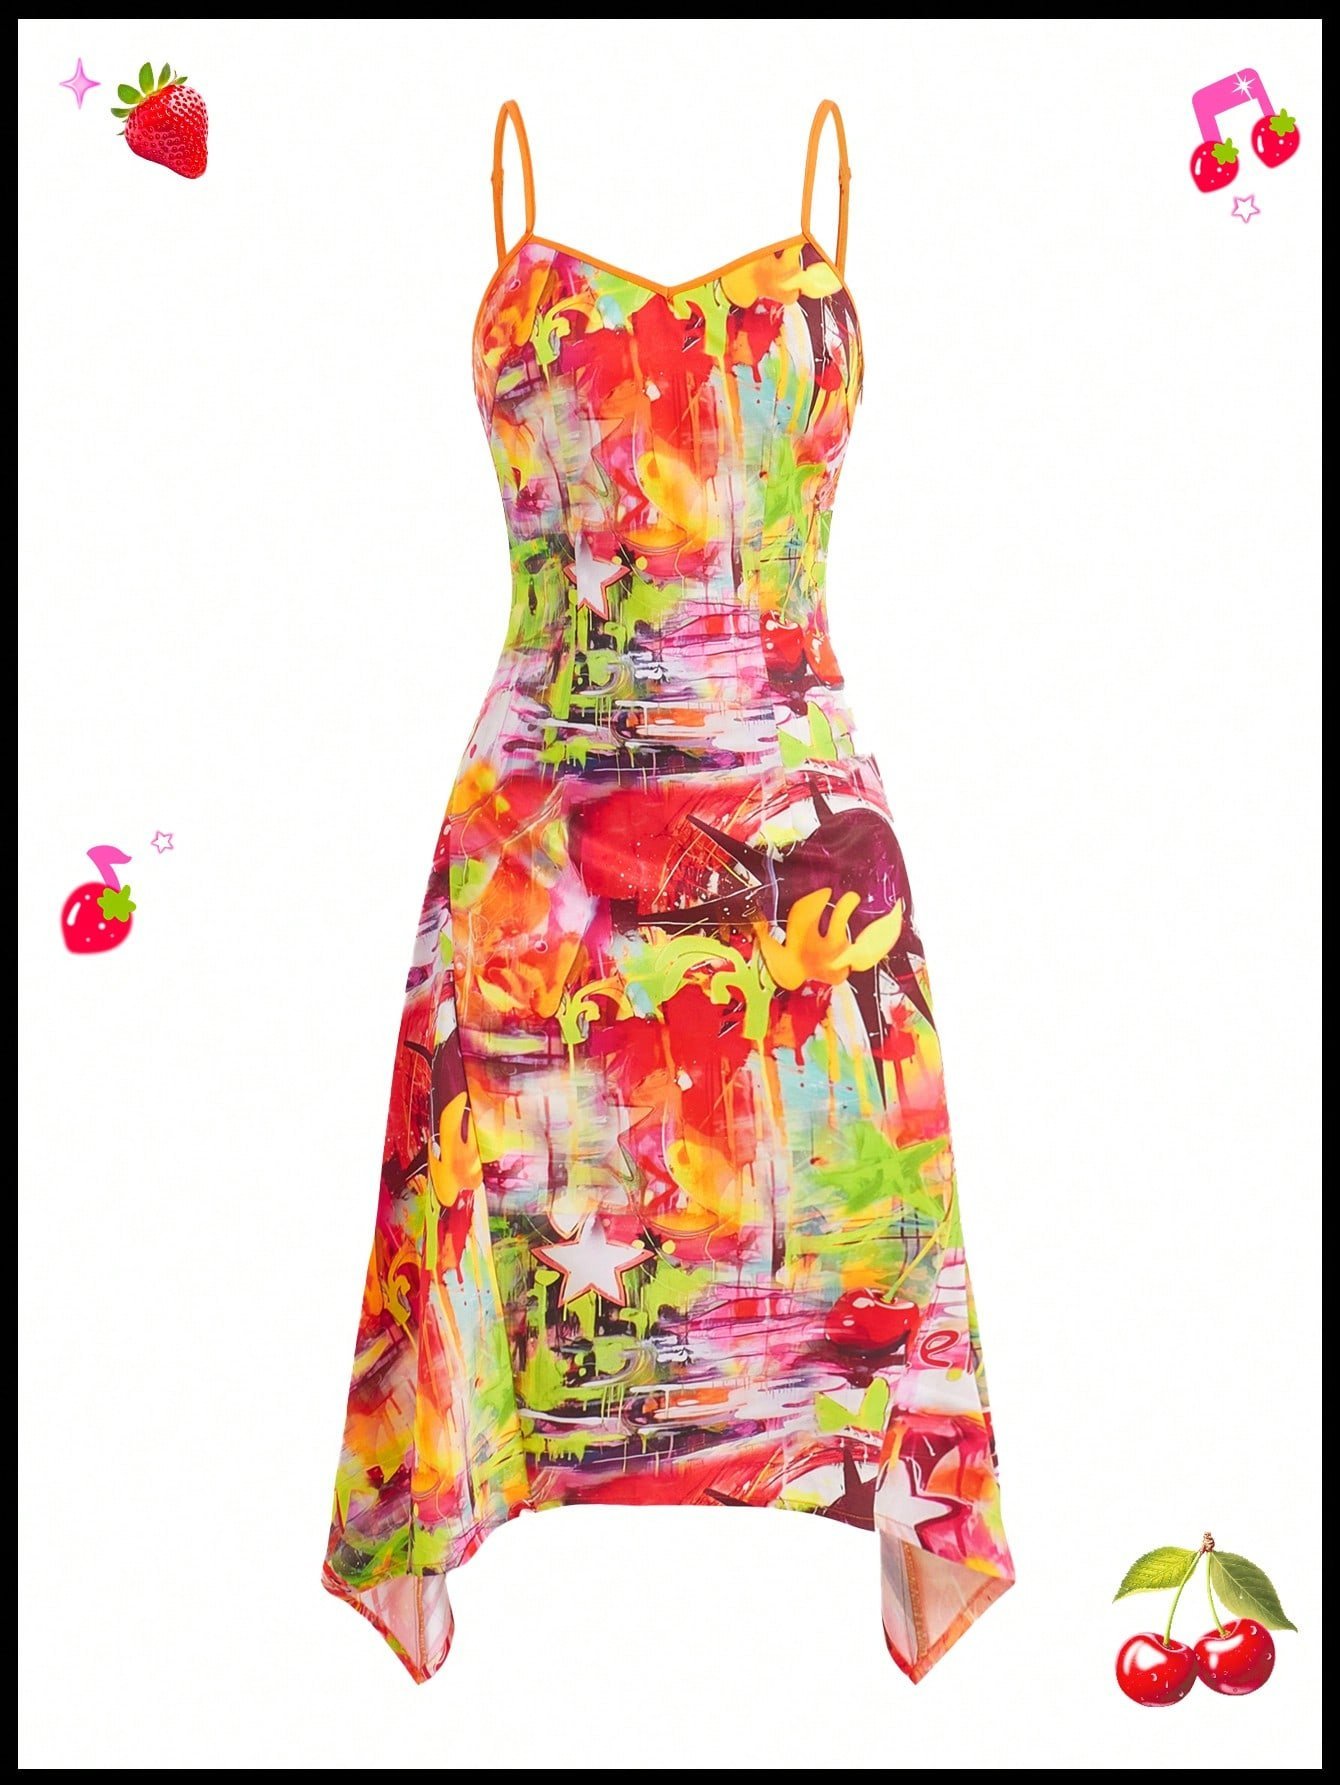 SHEIN Neu ドーパミン女性用夏スカート グラフィティデザインのカミソールドレス